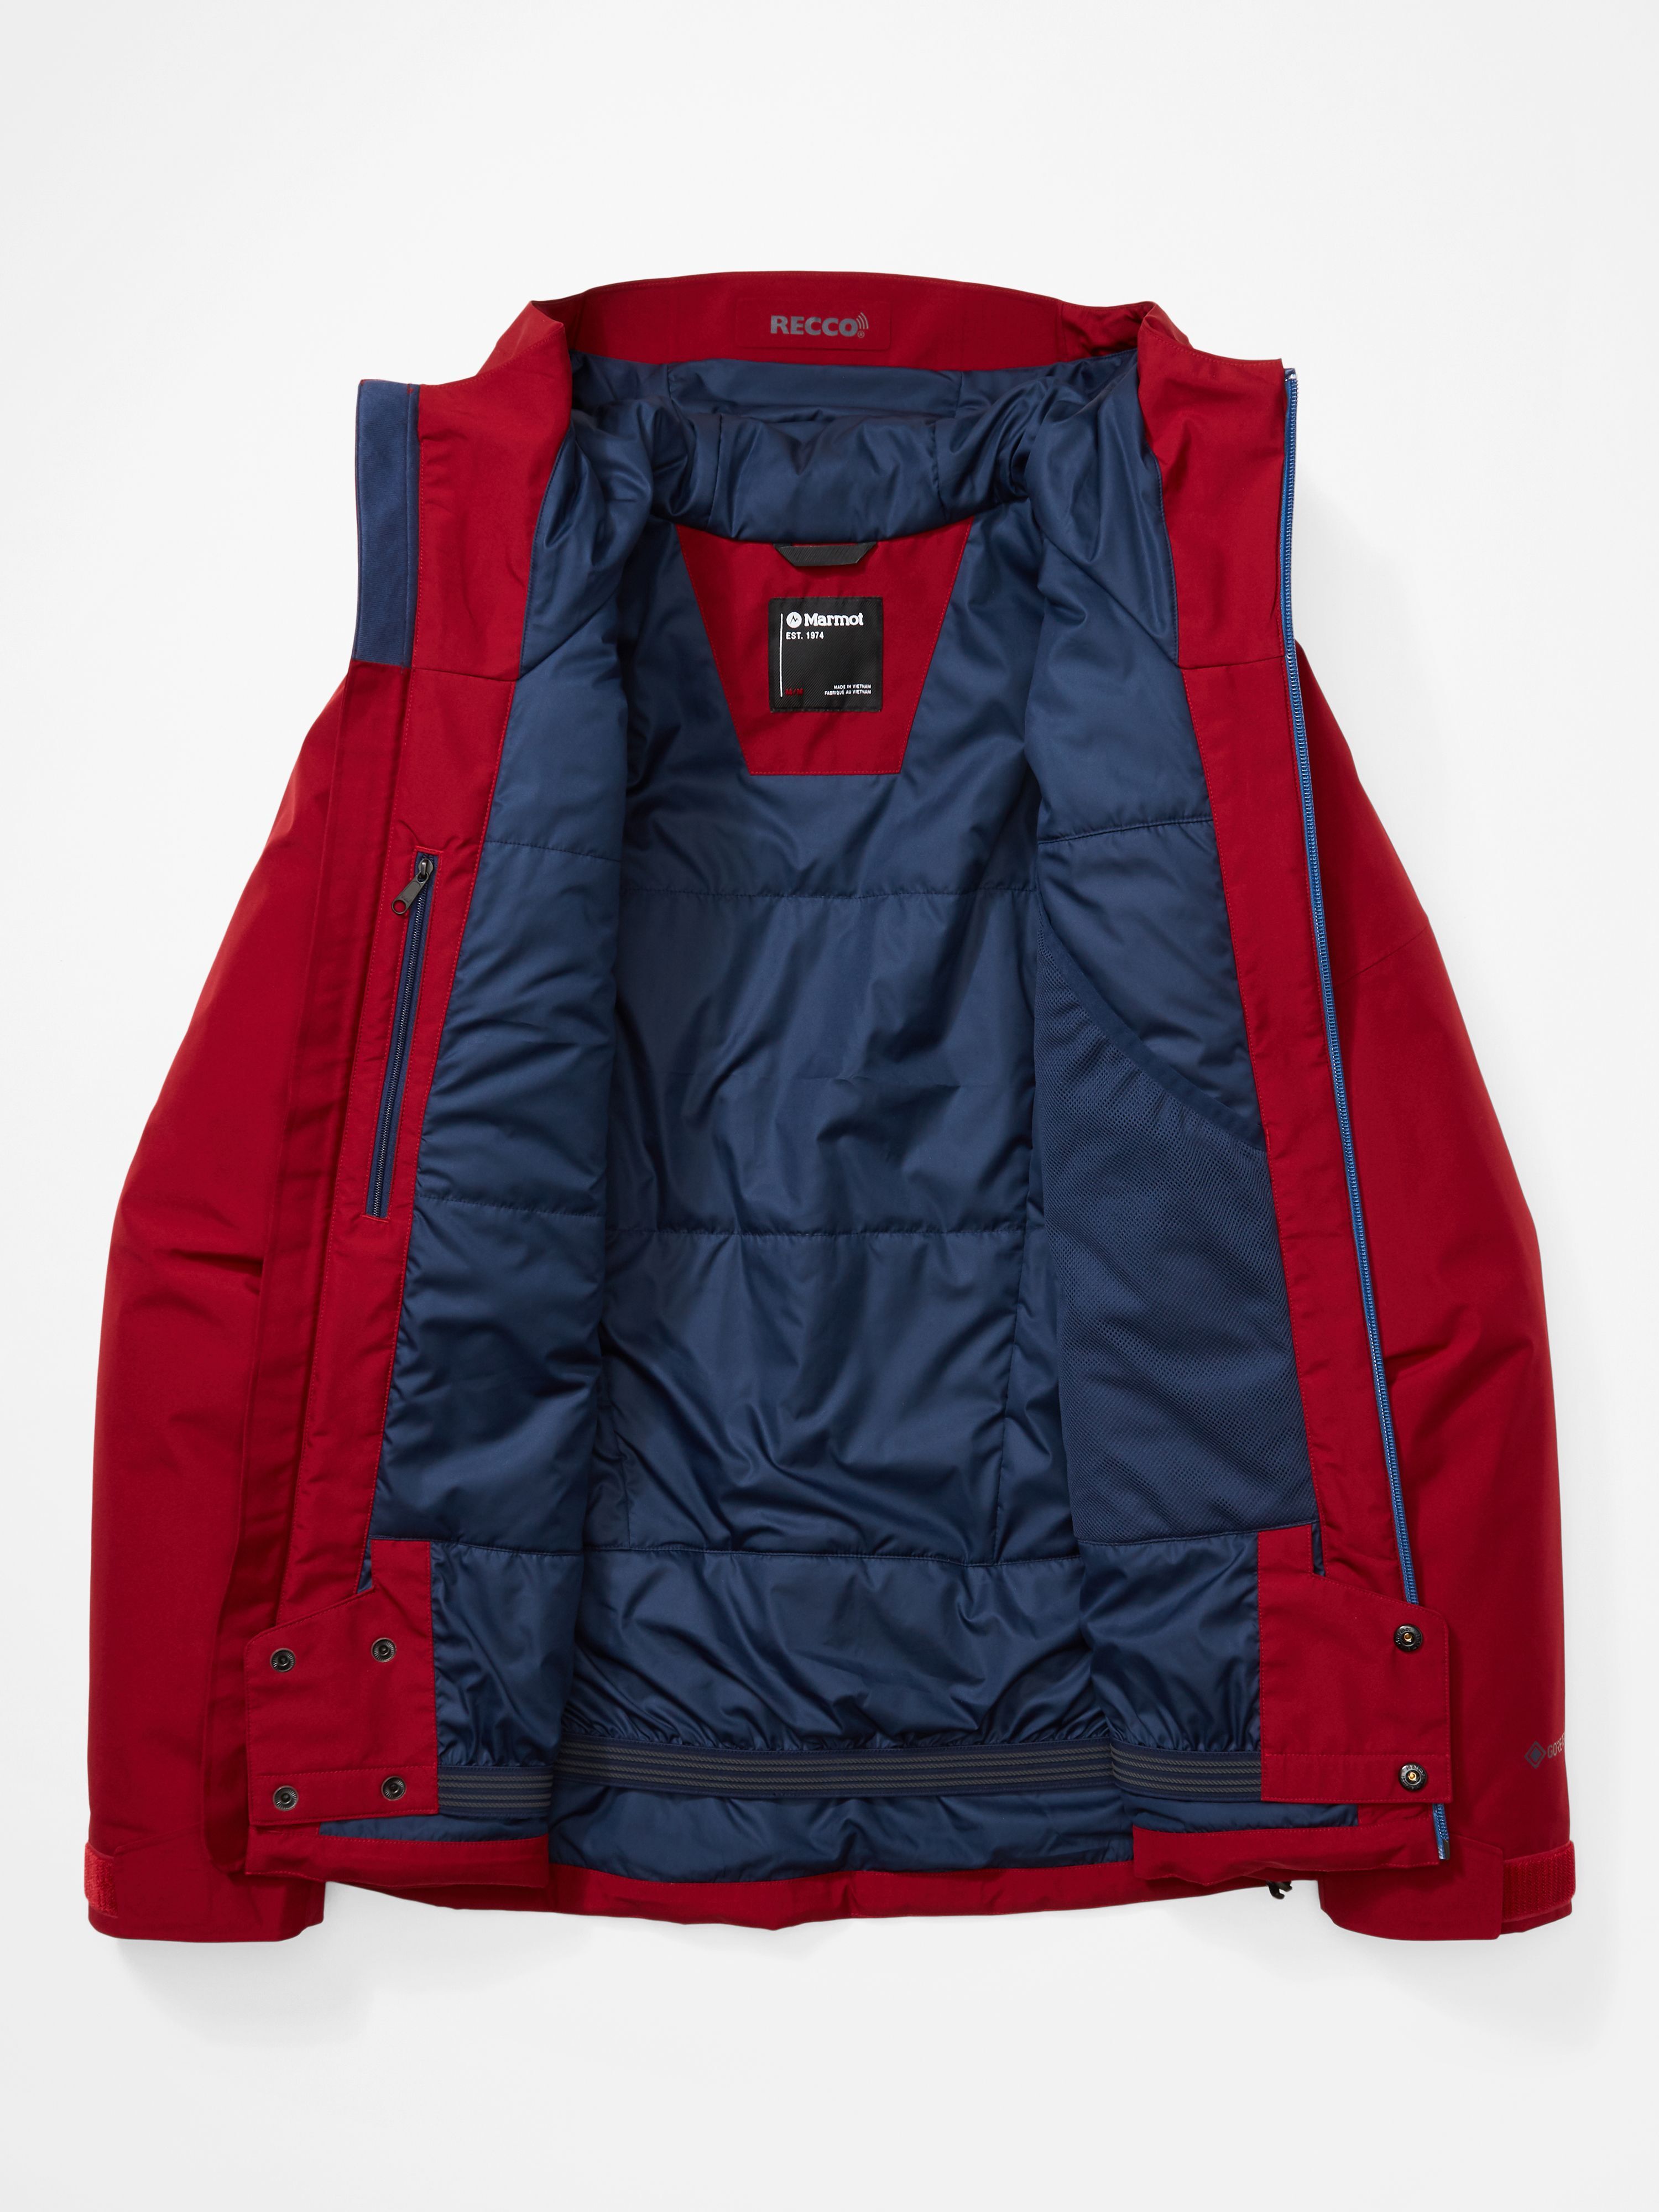 Marmot Lightray Jacket - Ski jacket - Men's